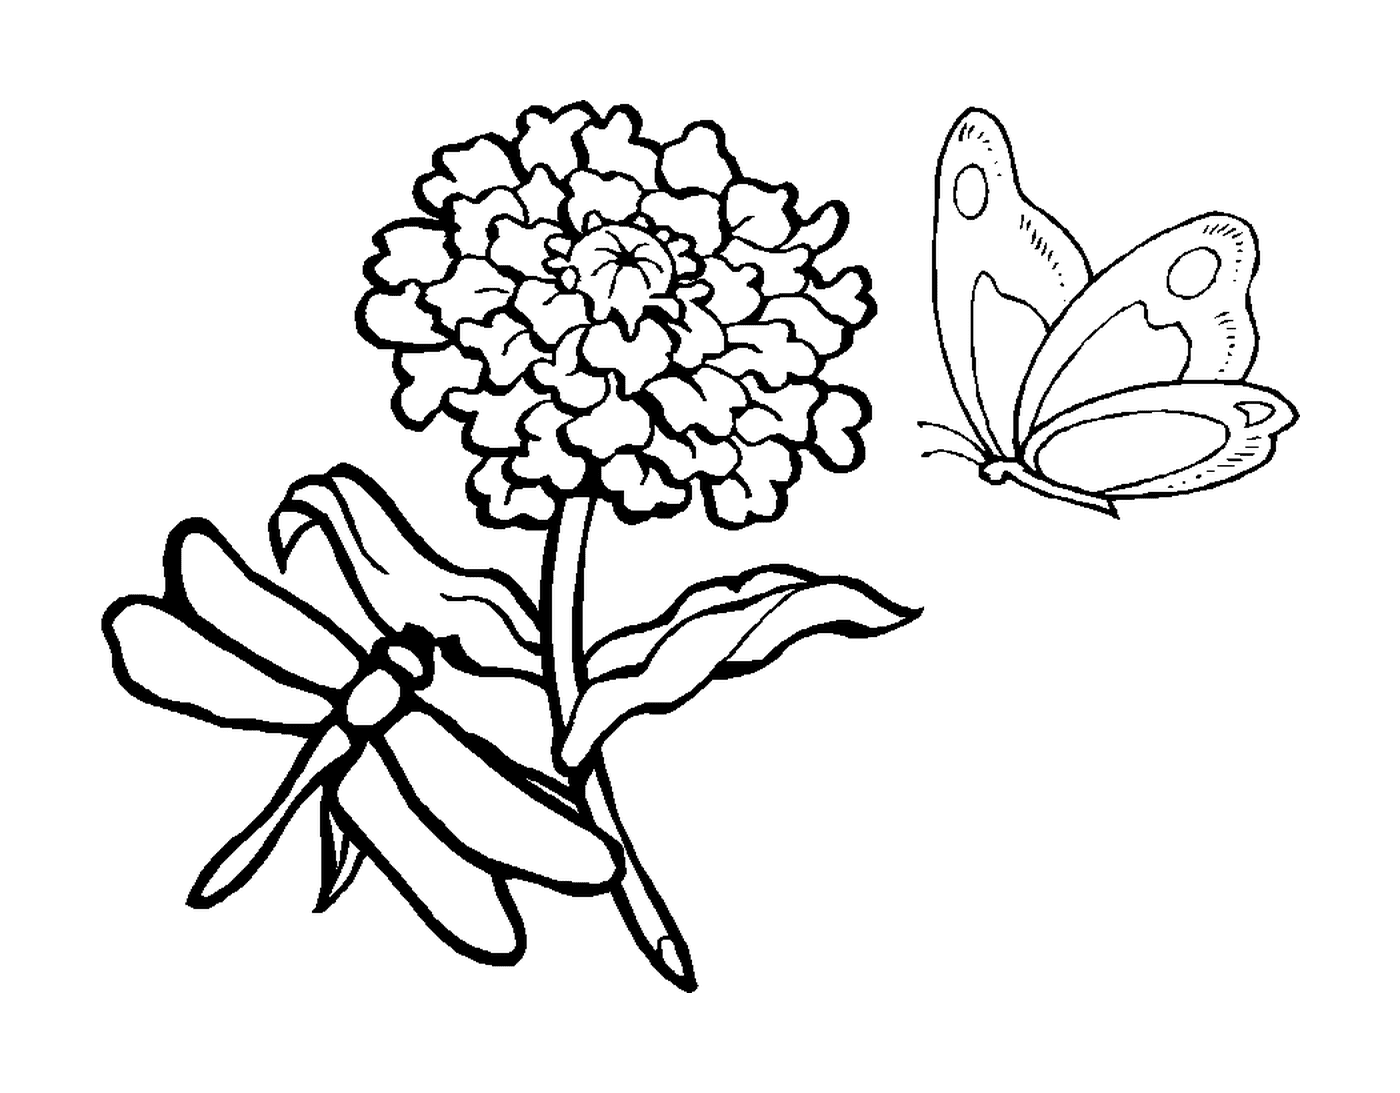  libélula y mariposa cerca 